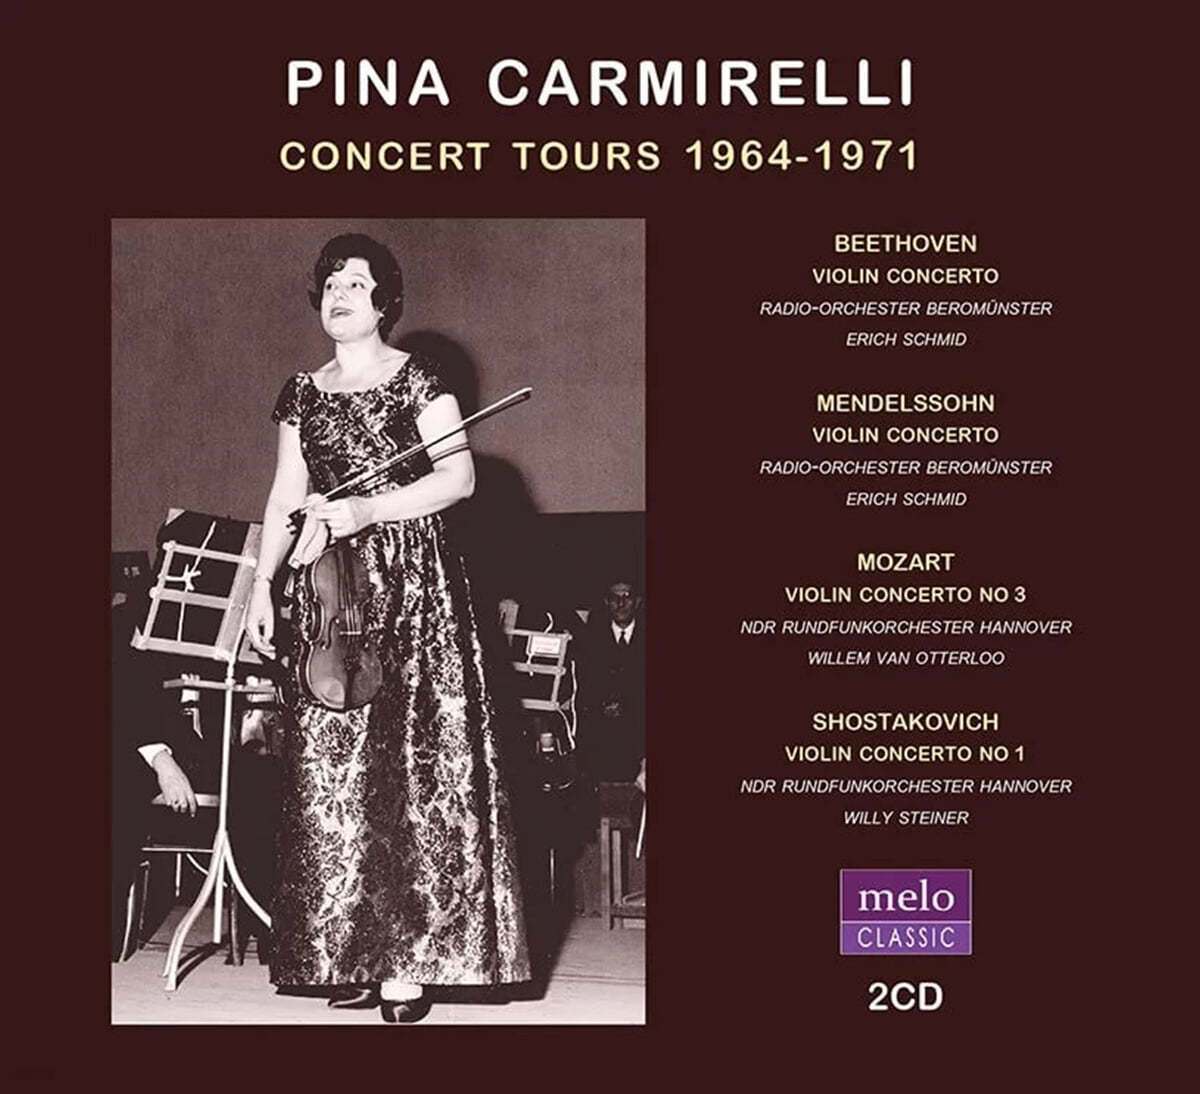 Pina Carmirelli 피나 카르미렐리 연주회 실황 (1964-1971) - 베토벤, 멘델스존, 모차르트, 쇼스타코비치 협주곡 (Concert Tours 1964-1971)